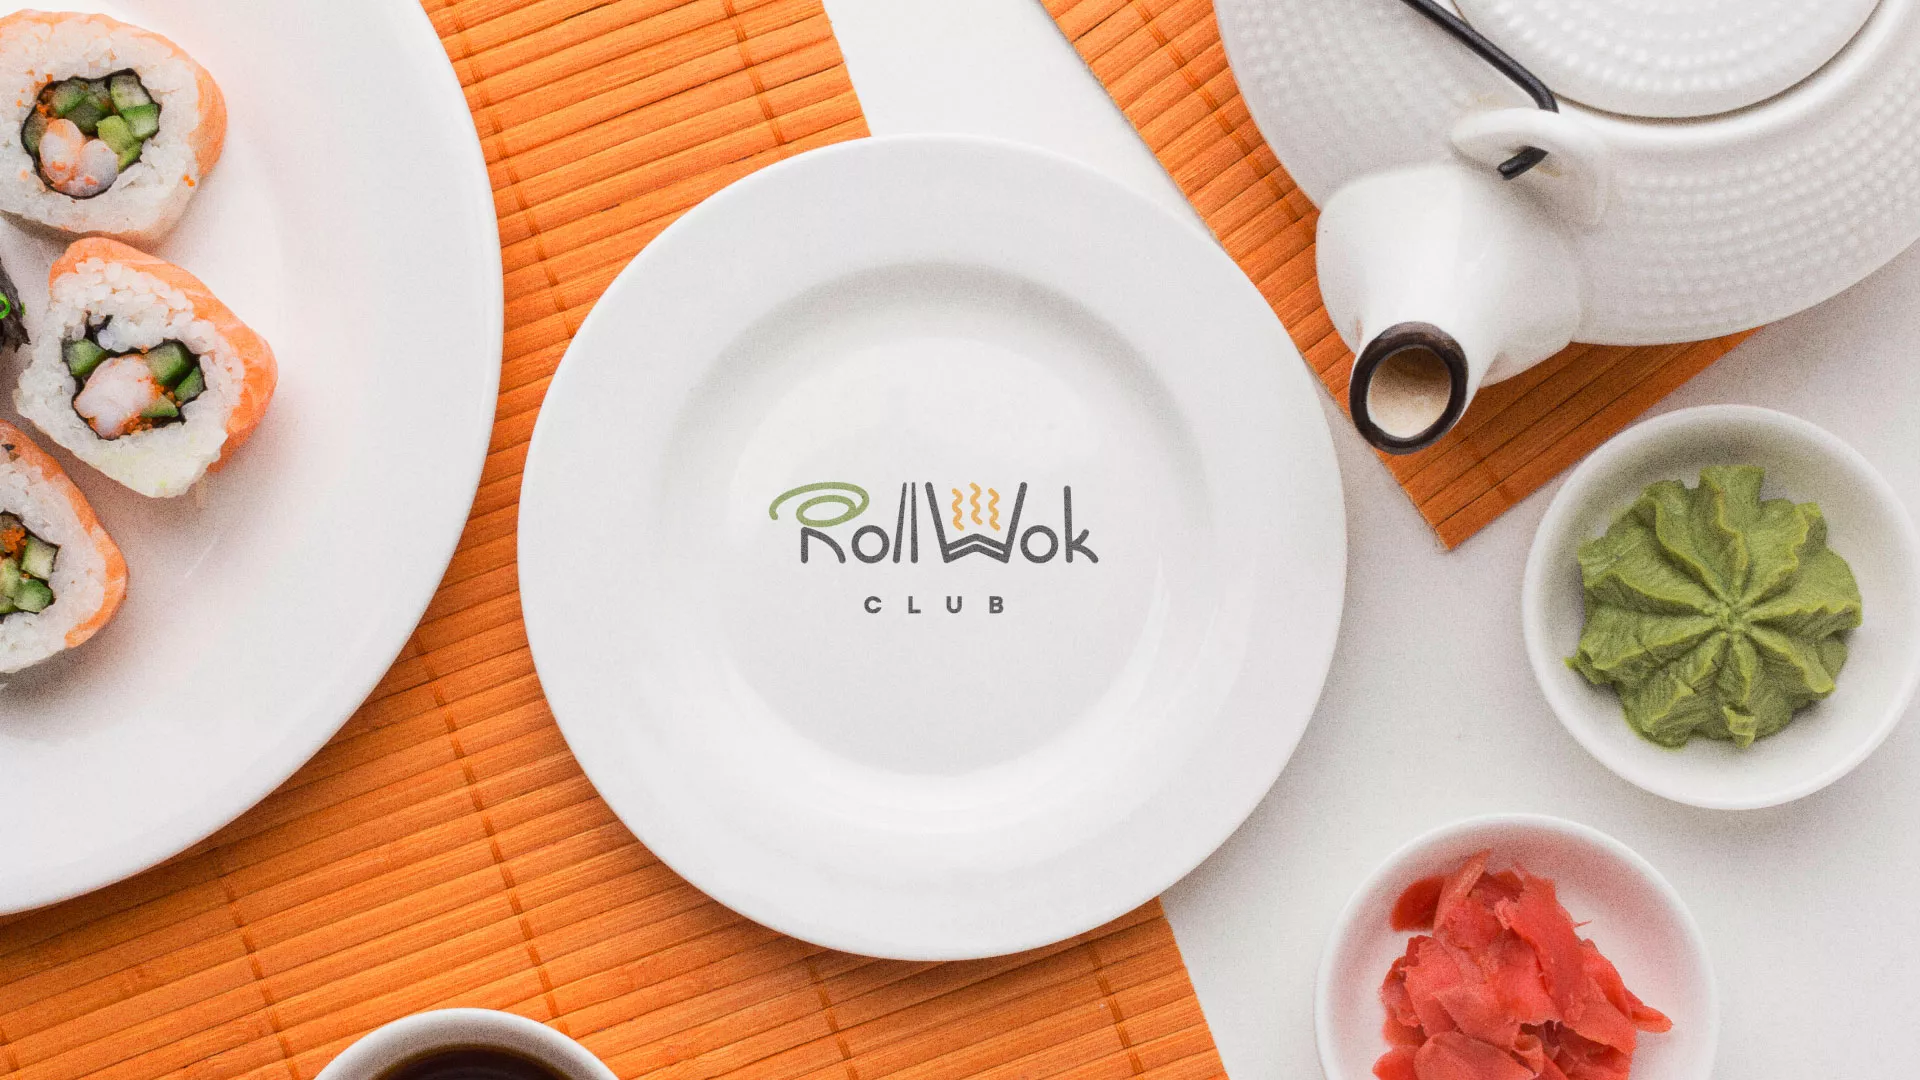 Разработка логотипа и фирменного стиля суши-бара «Roll Wok Club» в Орехово-Зуево